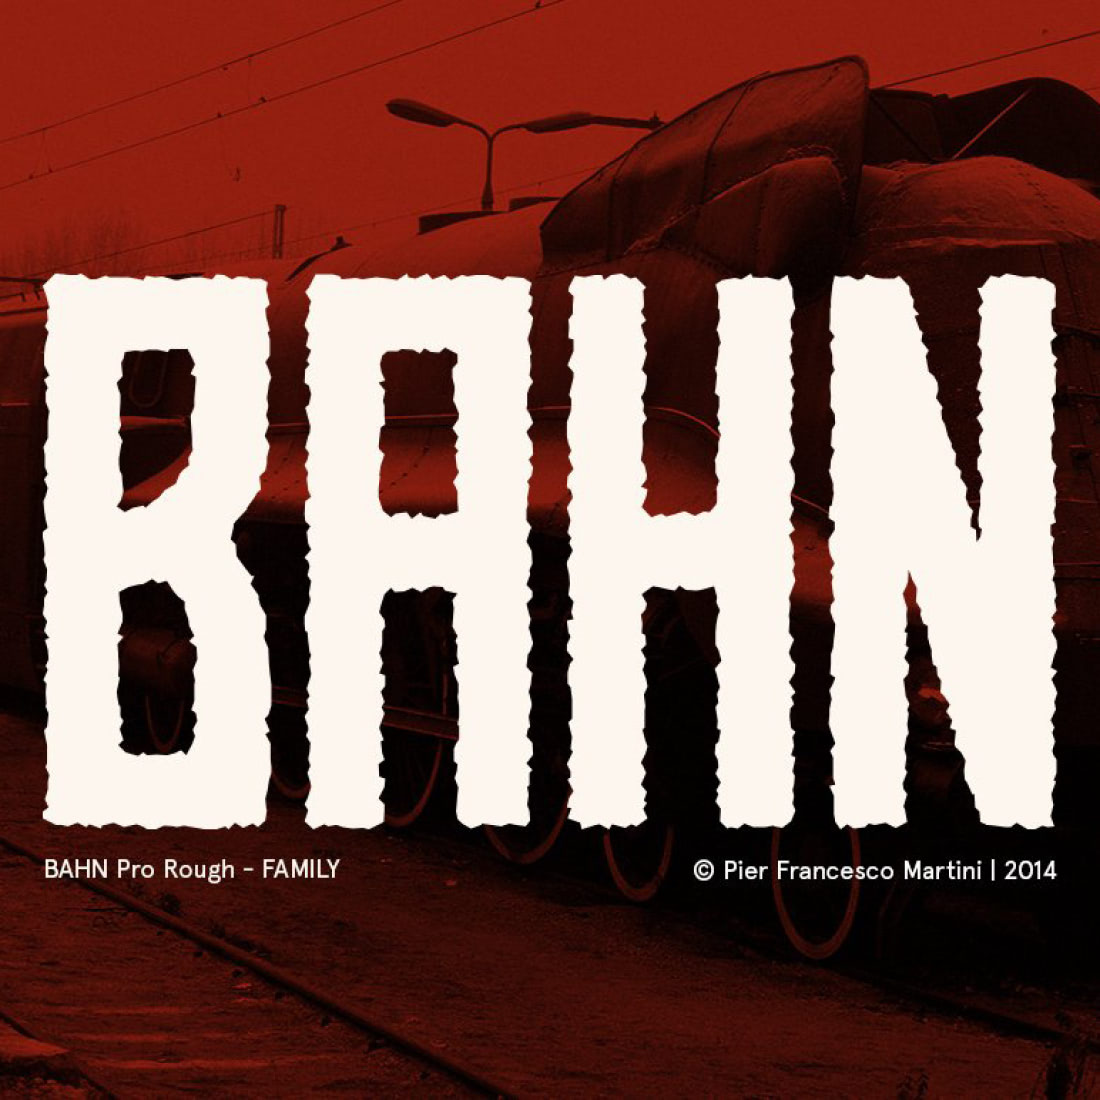 BAHN Pro Rough - FAMILY Font cover image.